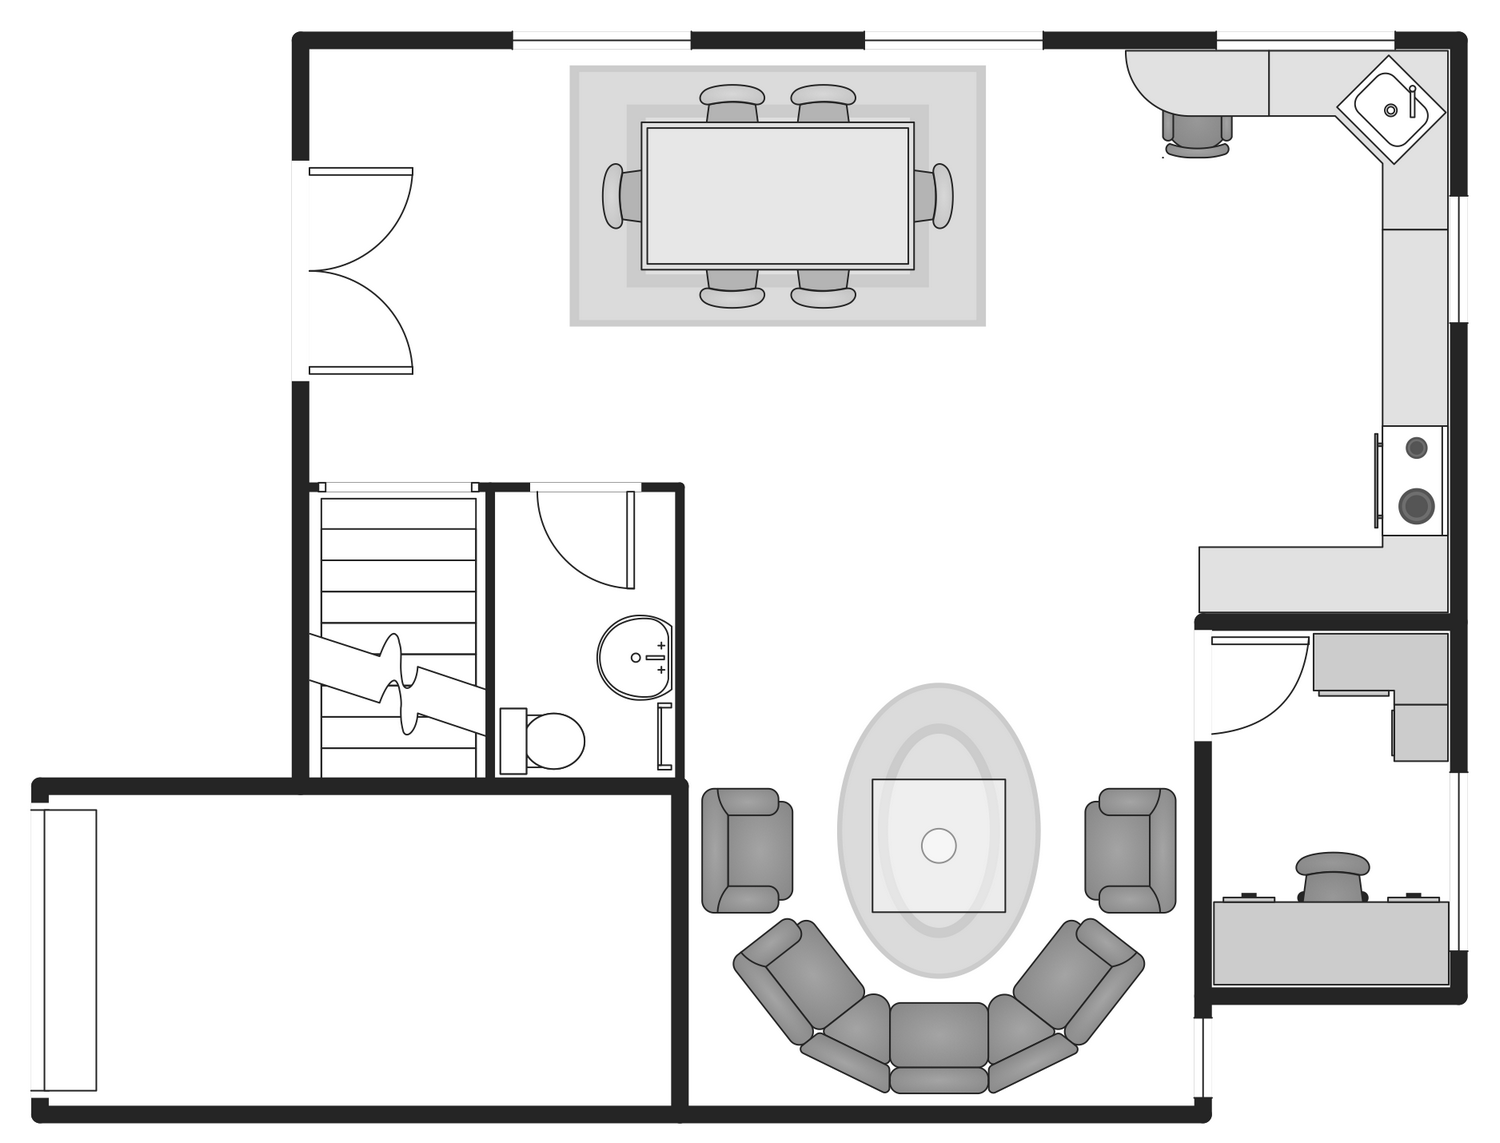 New Basic Floor Plans Solution for Complete Building Design